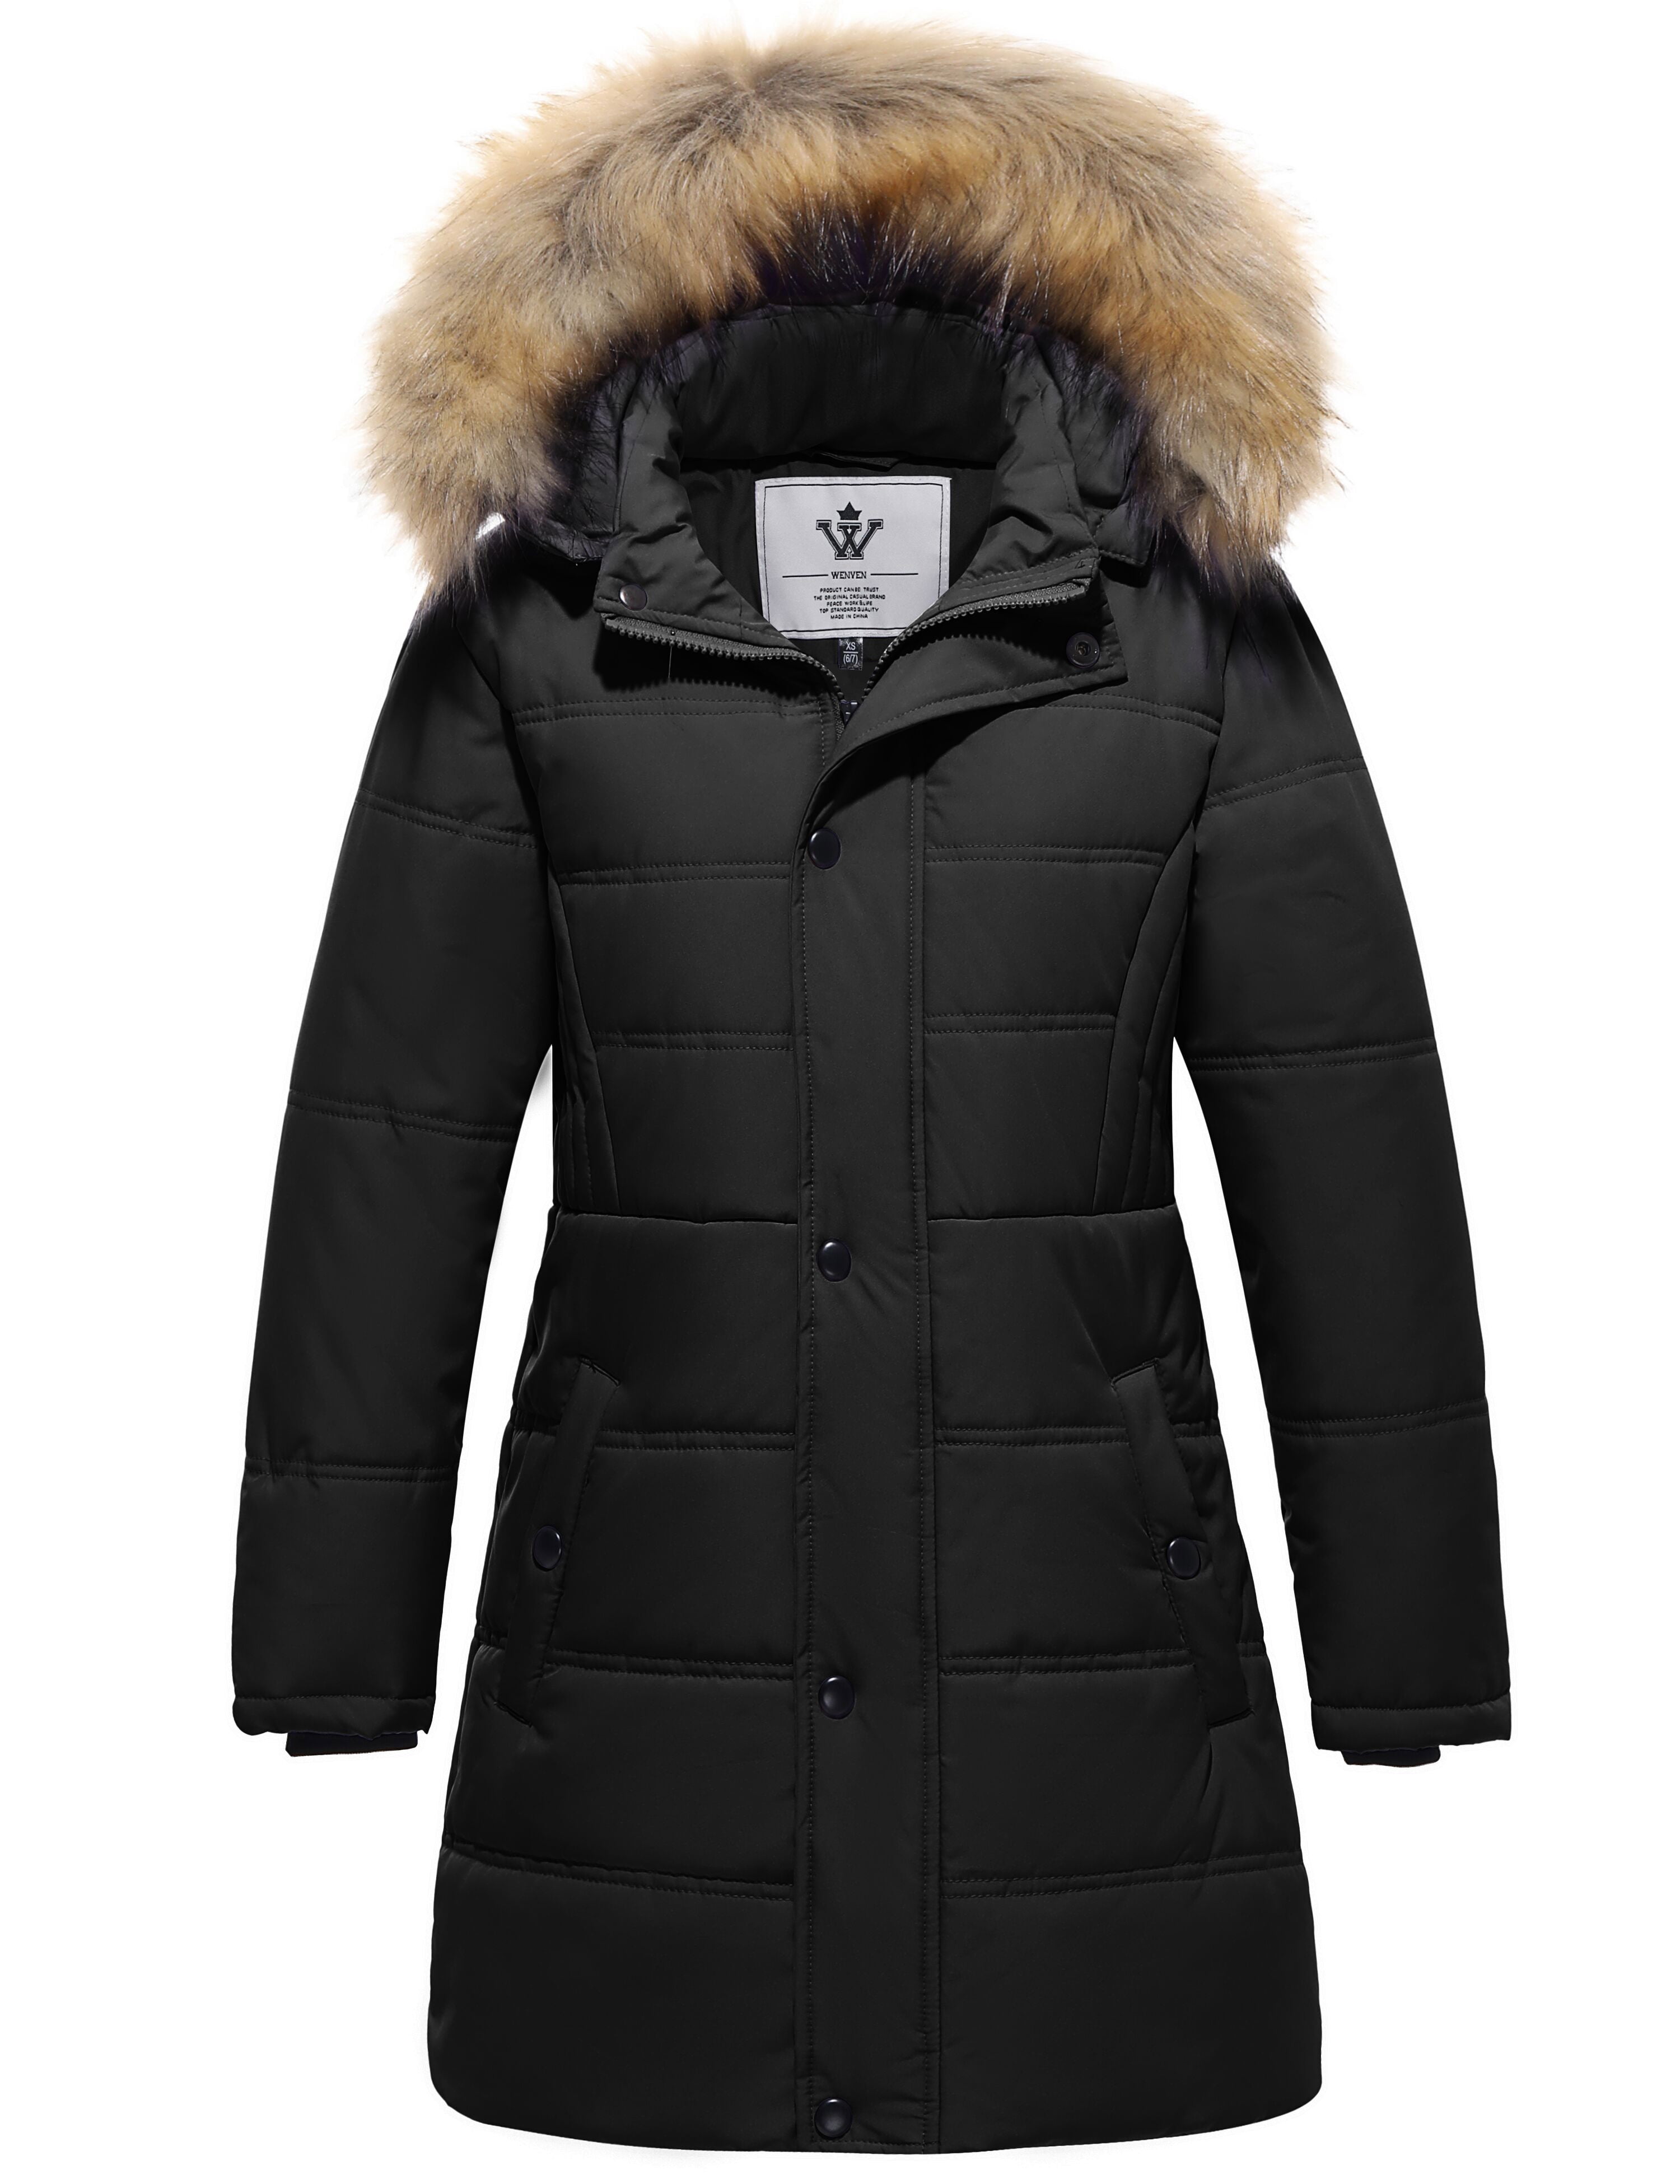 WenVen Girls Winter Coat Warm Puffer Jacket Hooded Waterproof Snow Coat ...